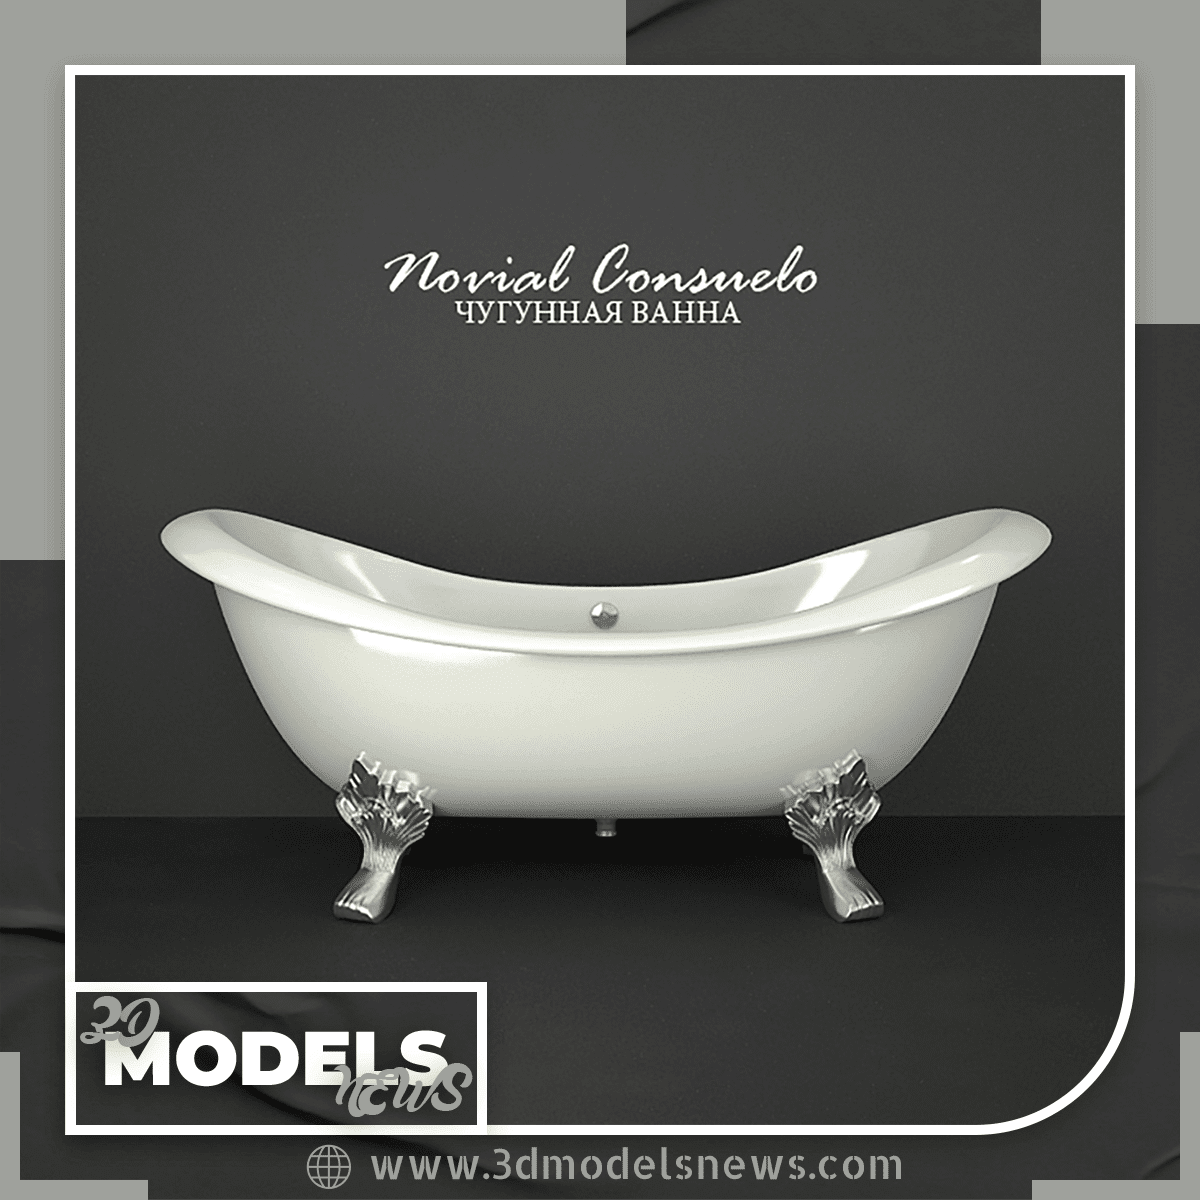 Bathtub Model Novial Consuelo